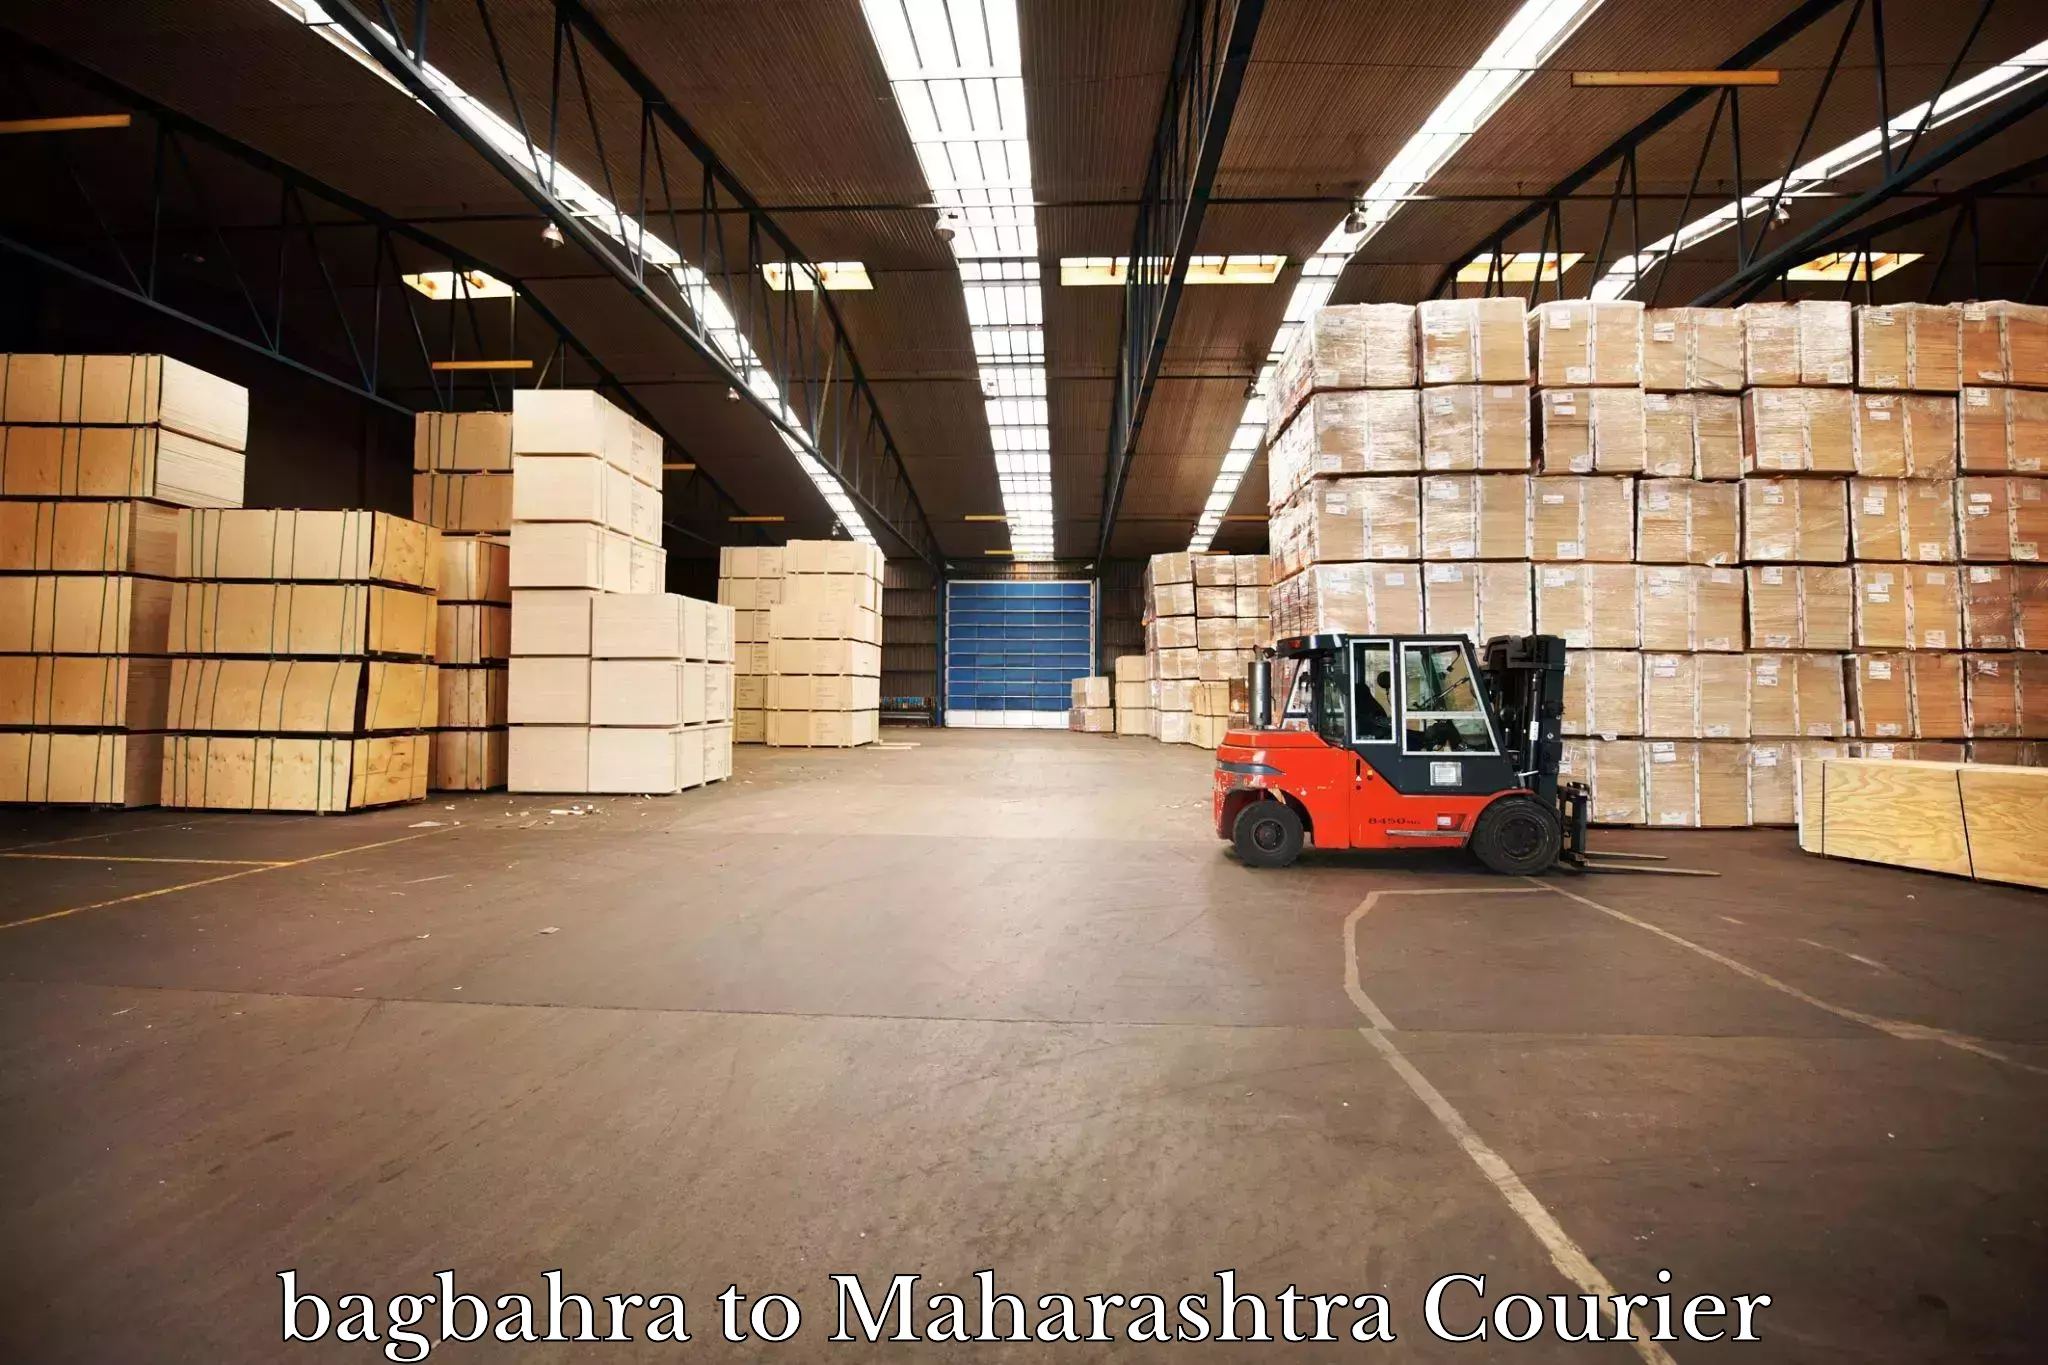 24-hour courier service bagbahra to Maharashtra